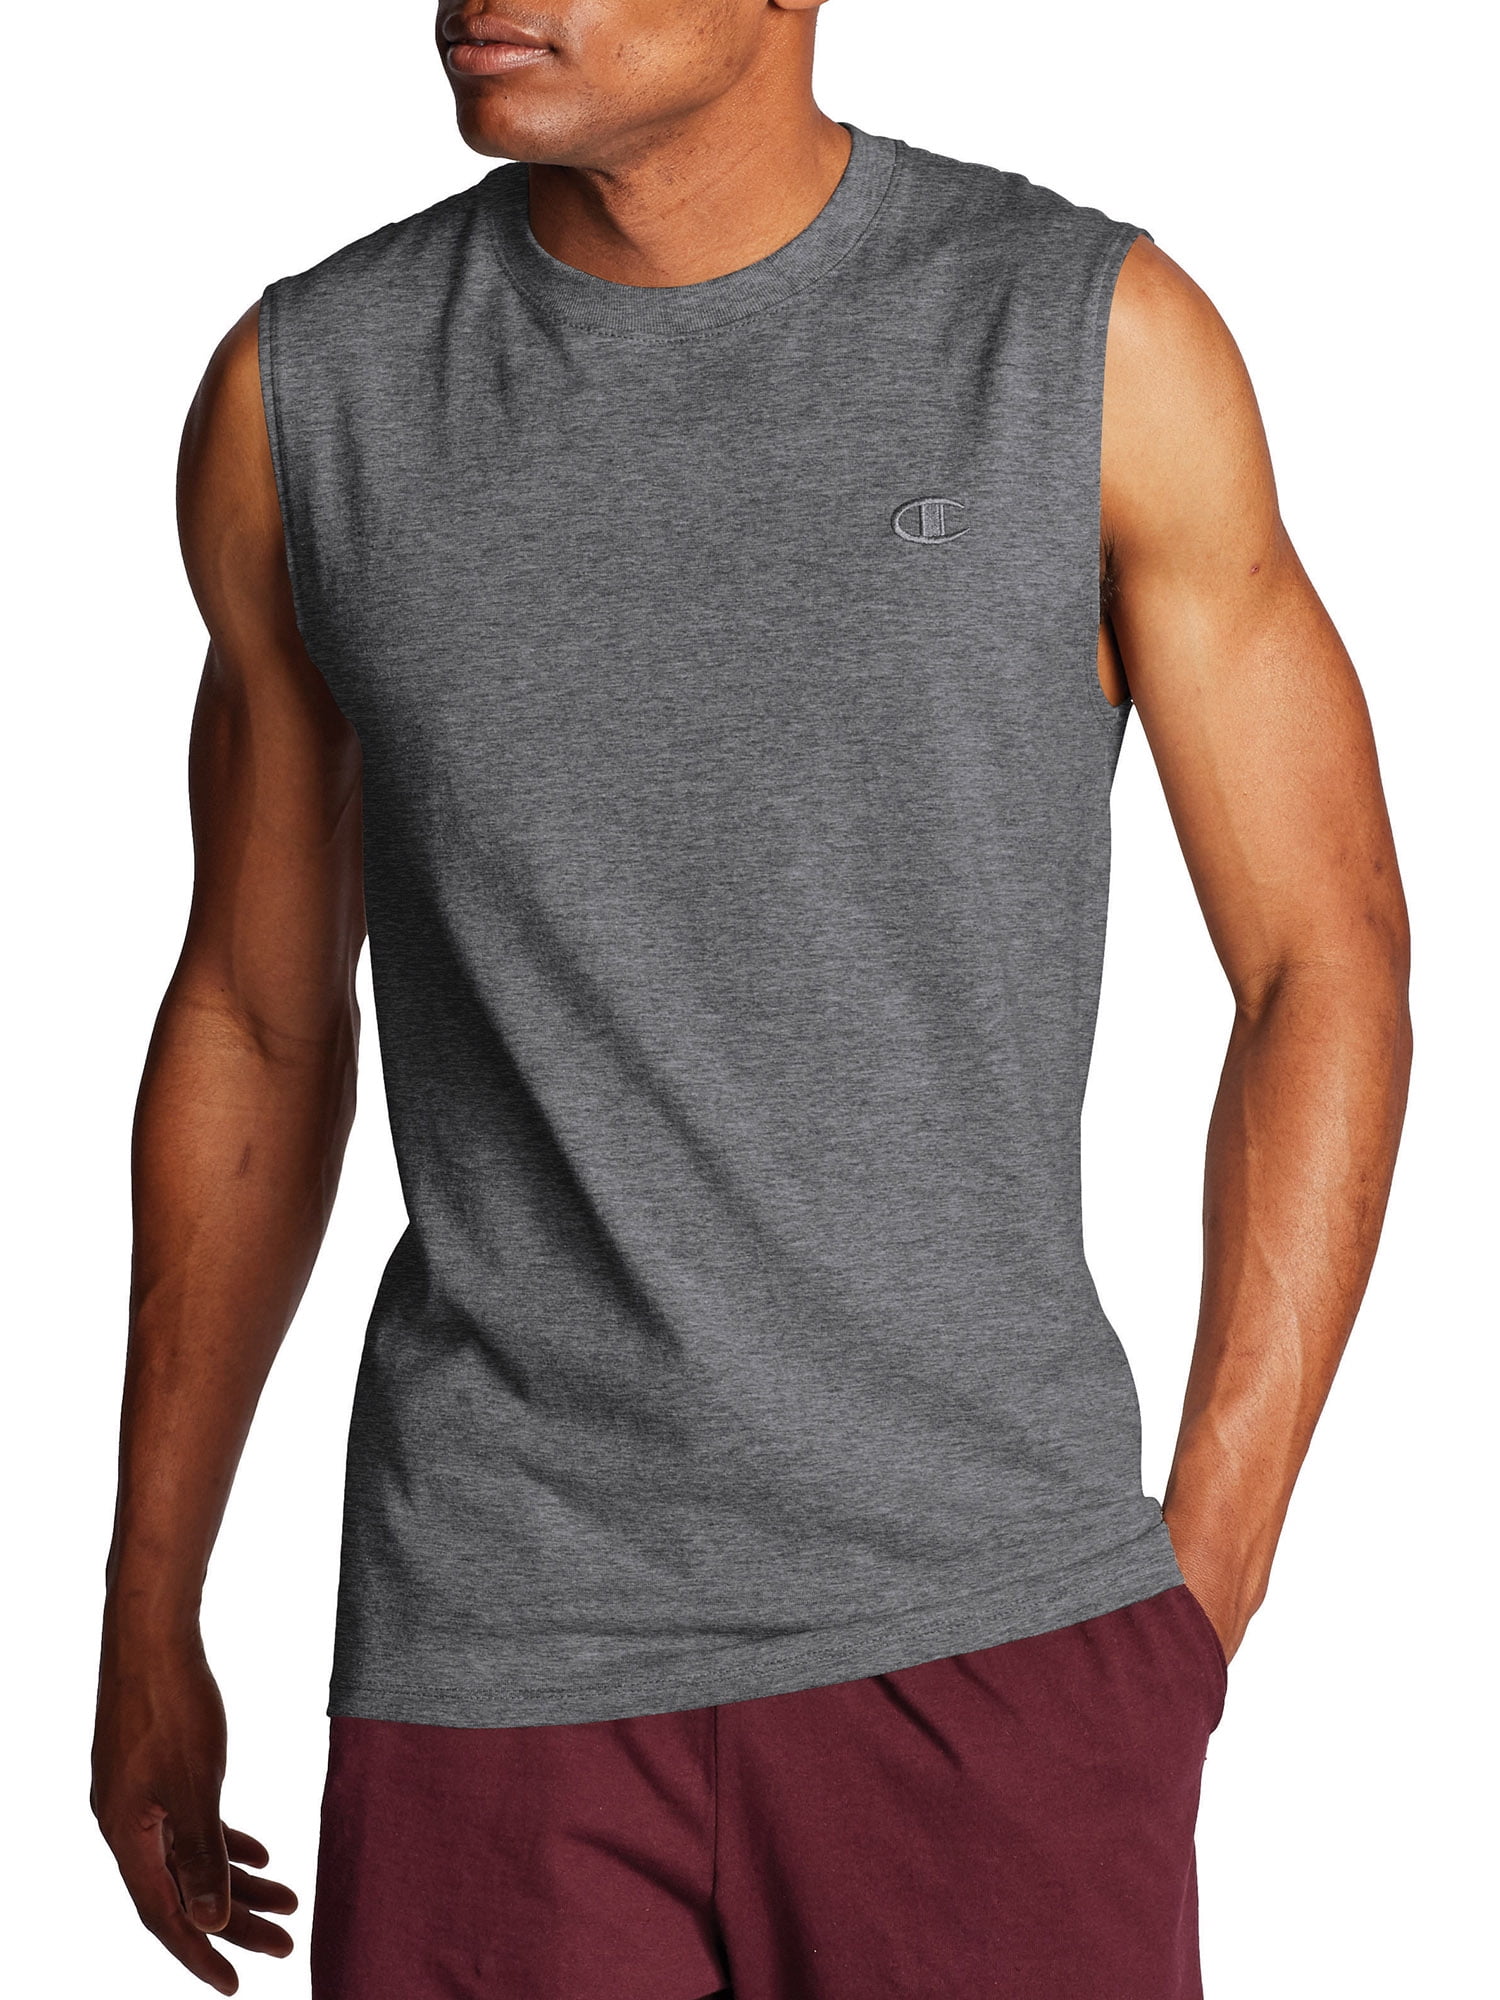 tall mens workout shirts